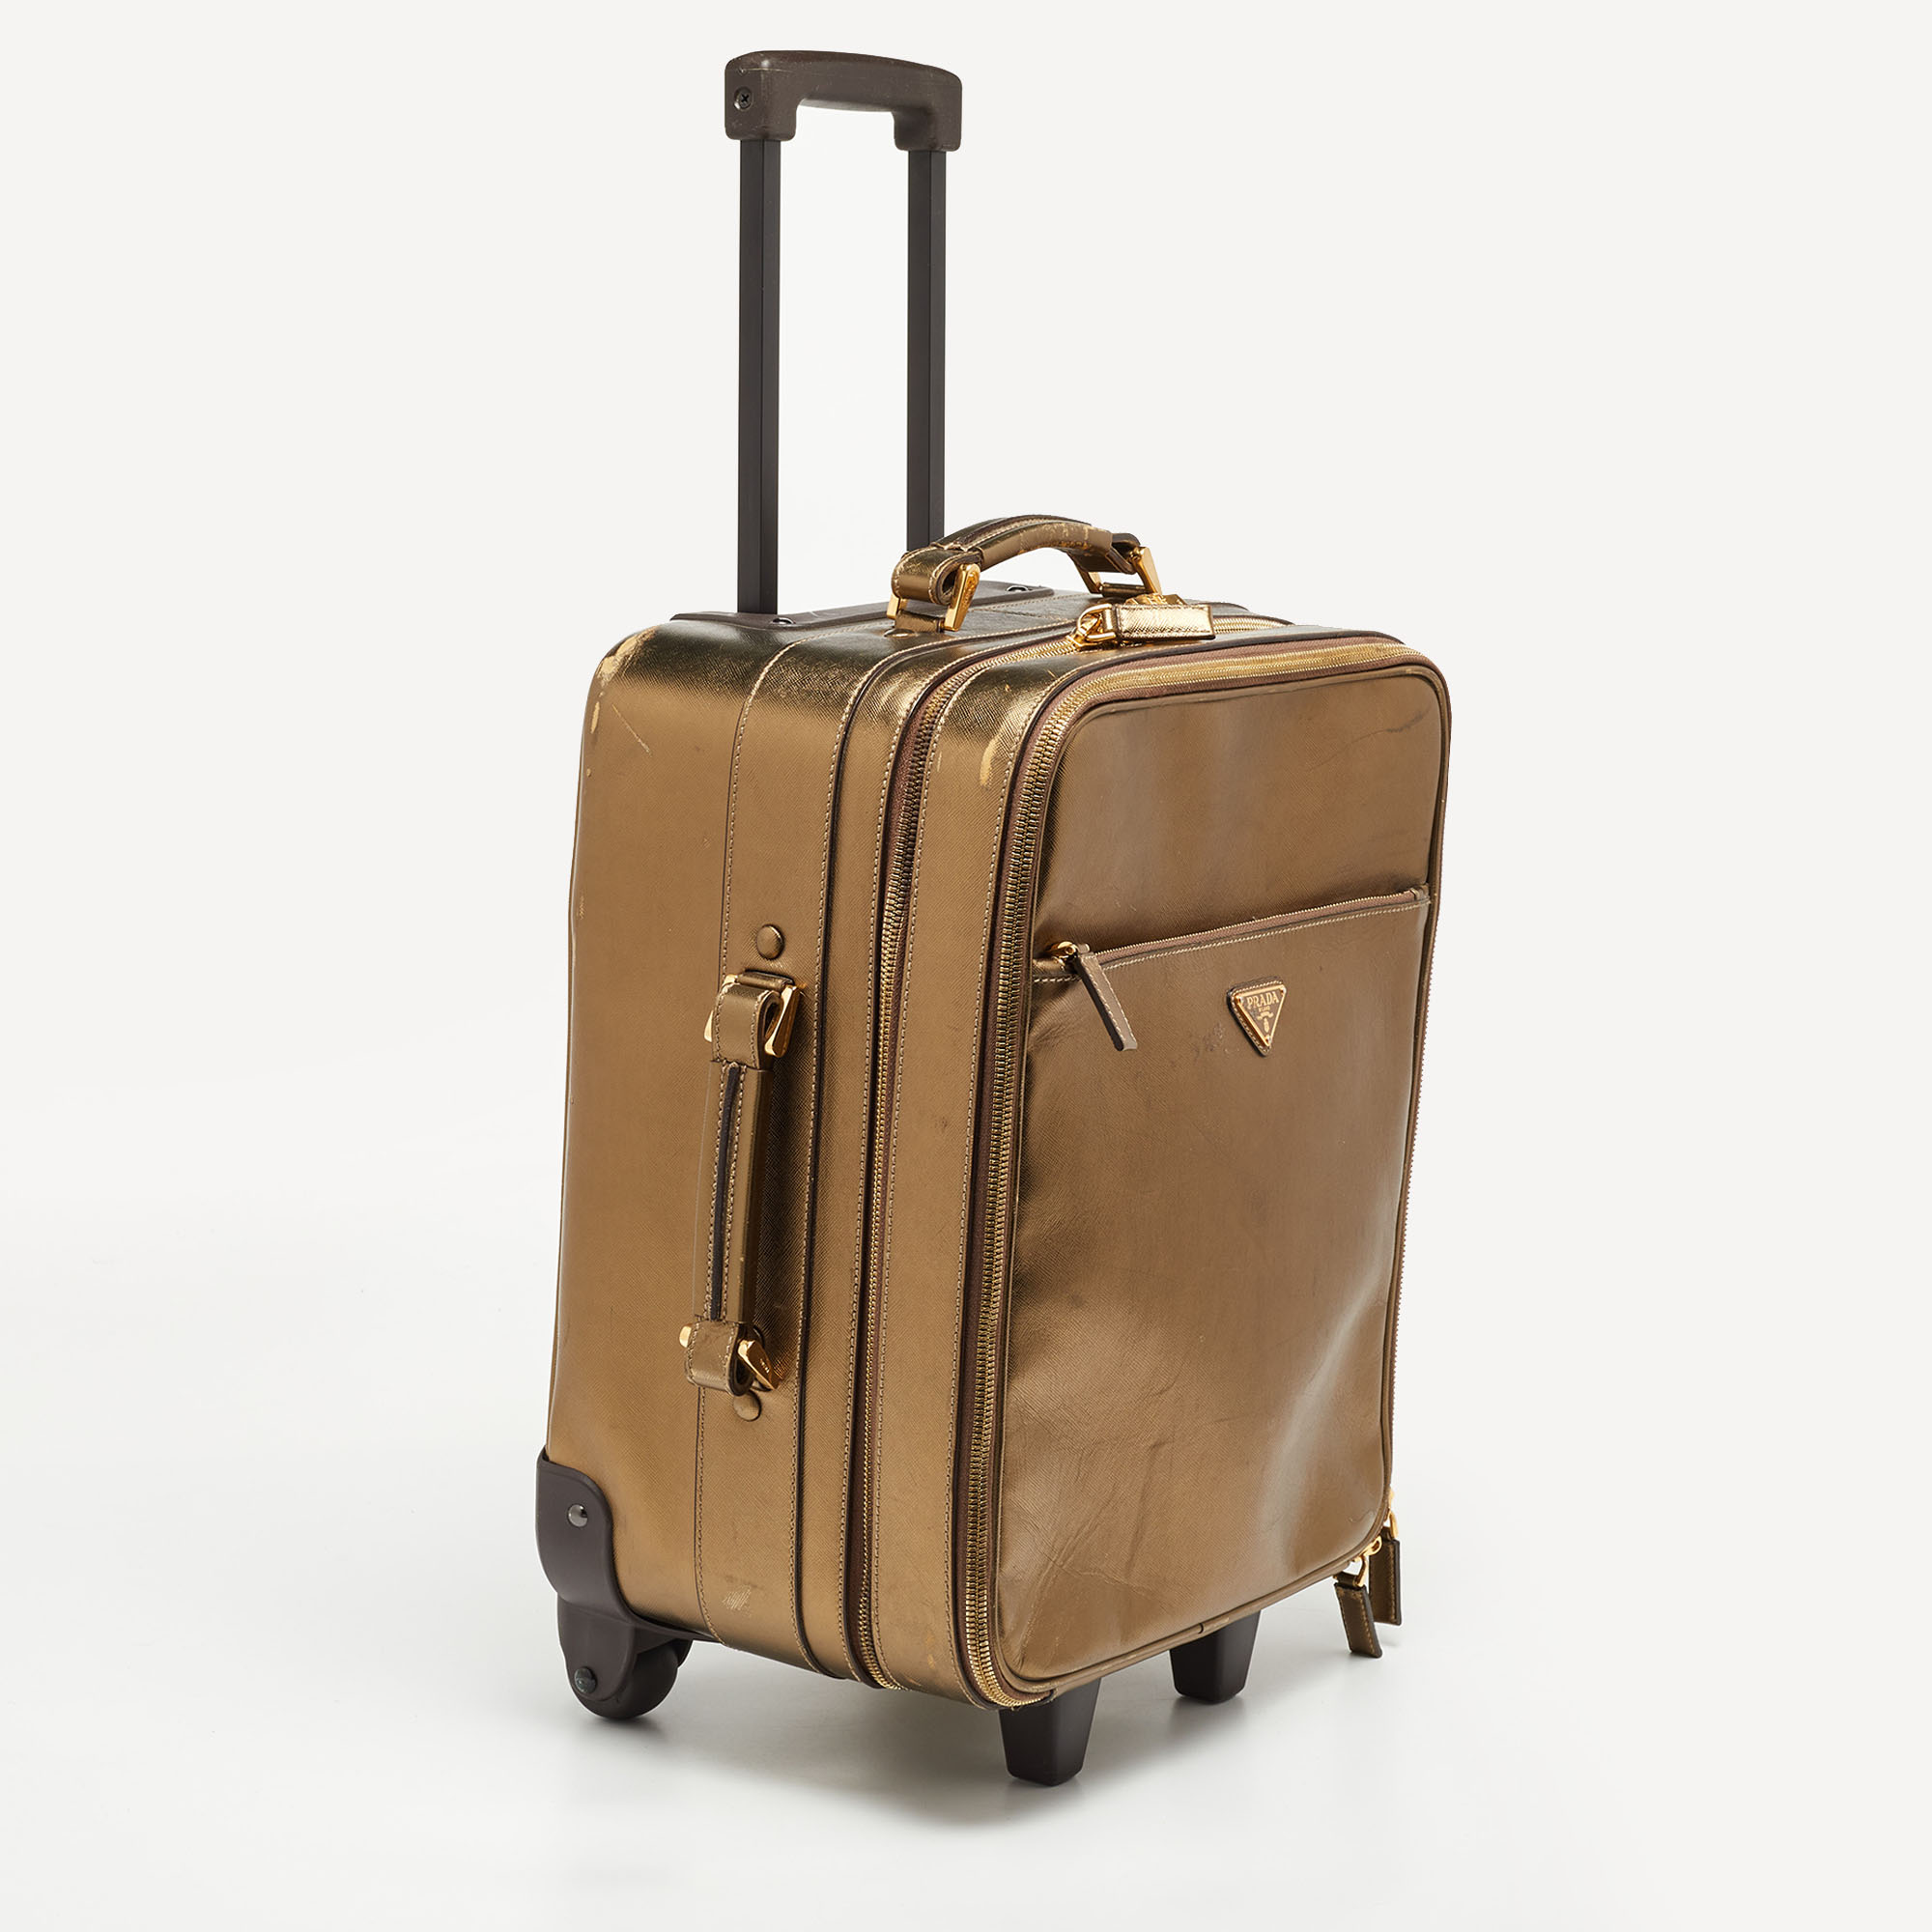 Prada Metallic Gold Saffiano Leather Travel Rolling Trolley Luggage